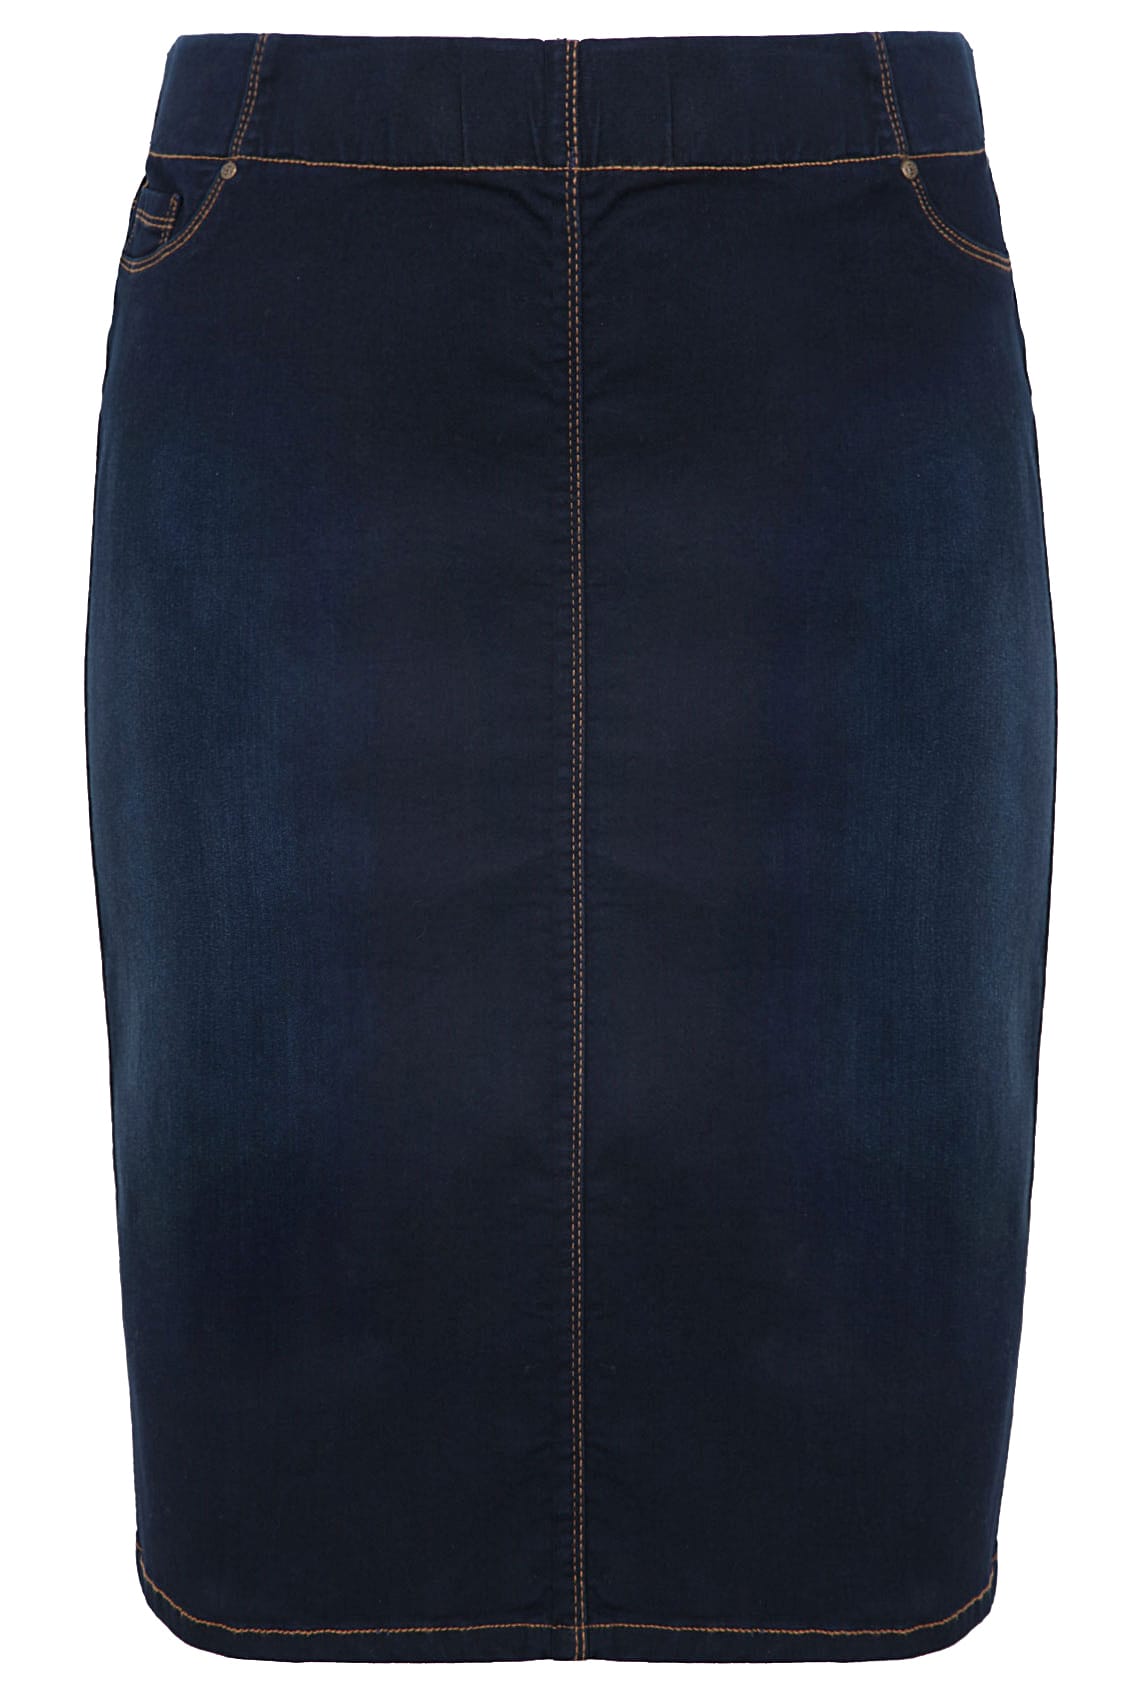 Indigo Blue Denim Pencil Skirt, Plus size 16 to 36